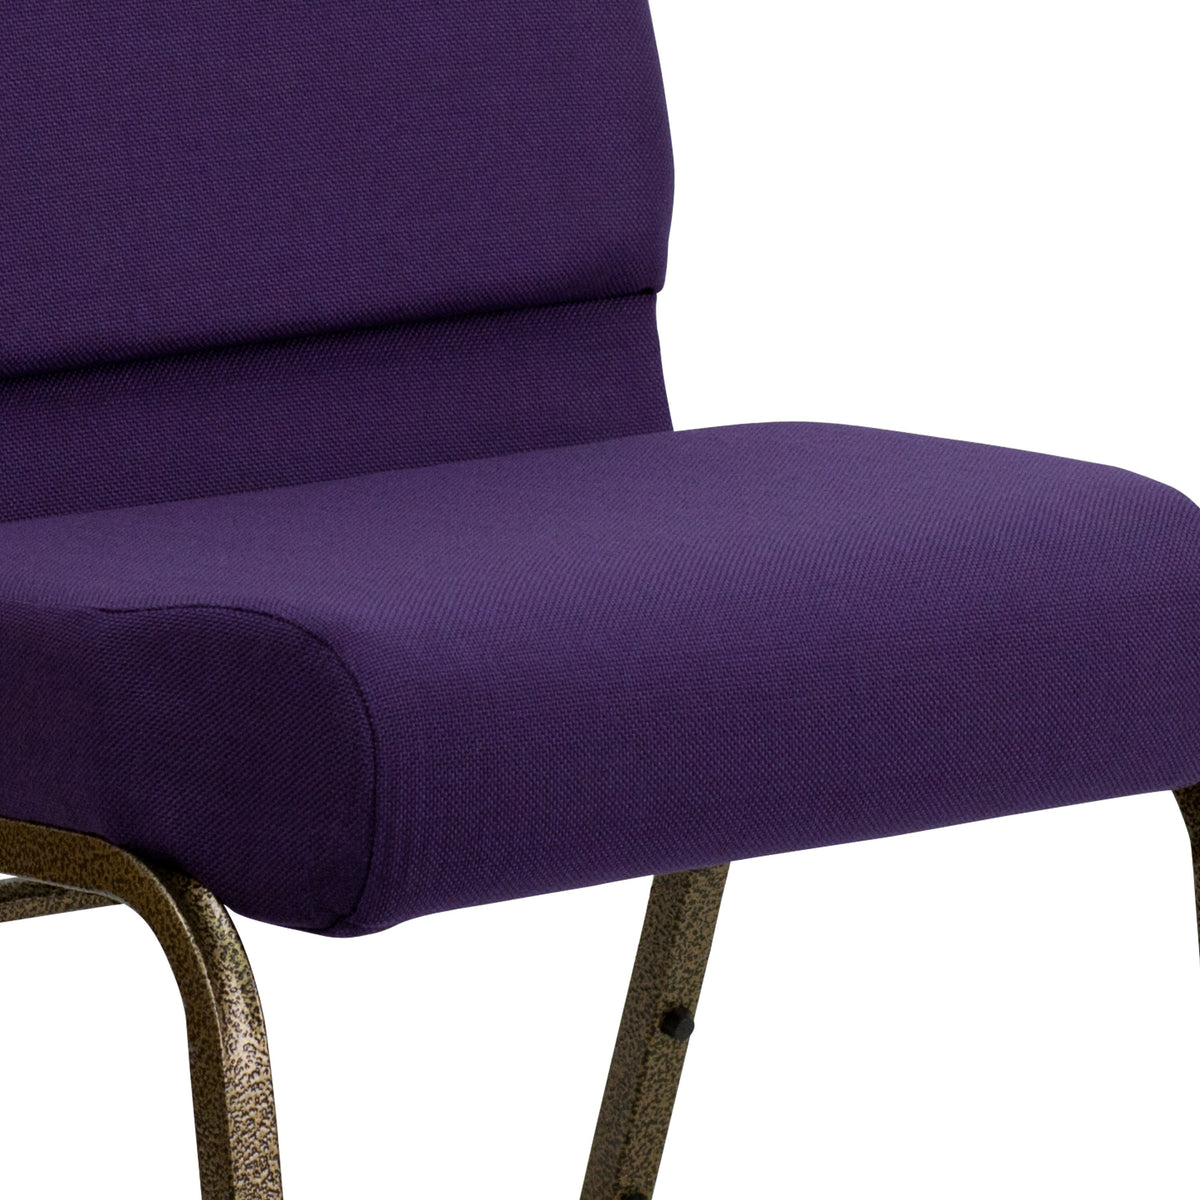 Royal Purple Fabric/Gold Vein Frame |#| 21inchW Stacking Church Chair in Royal Purple Fabric - Gold Vein Frame